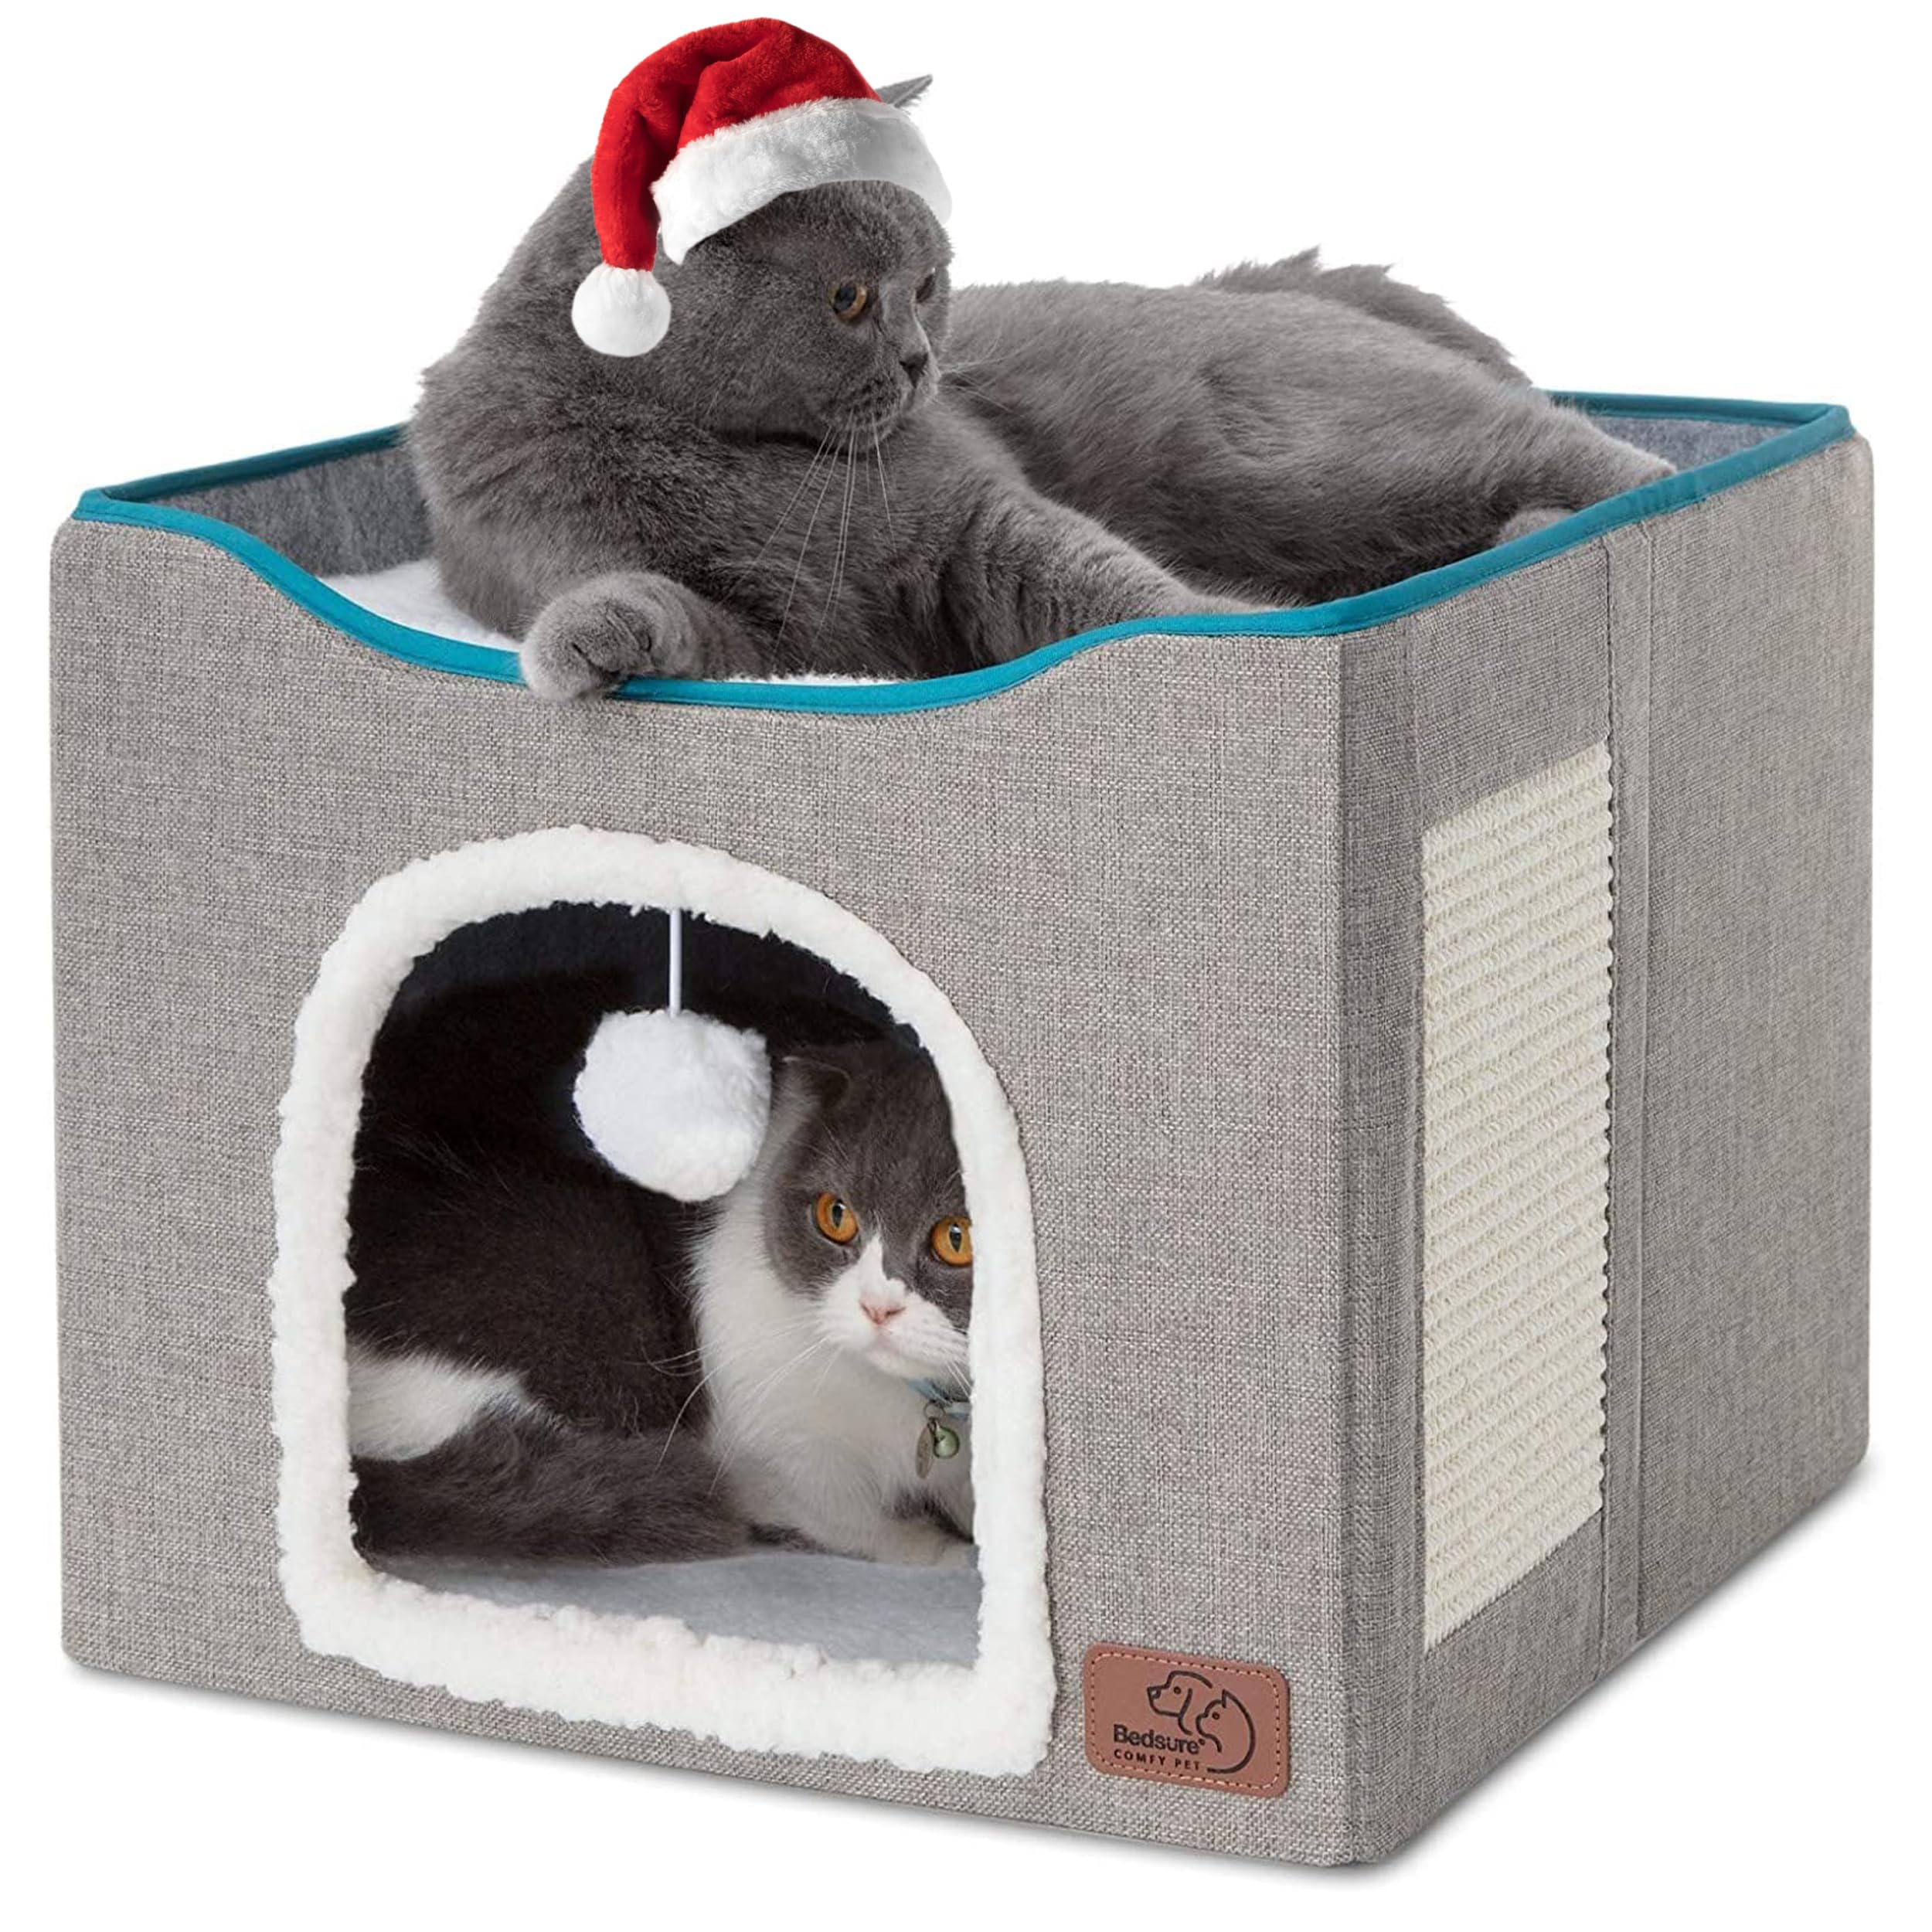 Bedsure Cat Beds for Indoor Cats